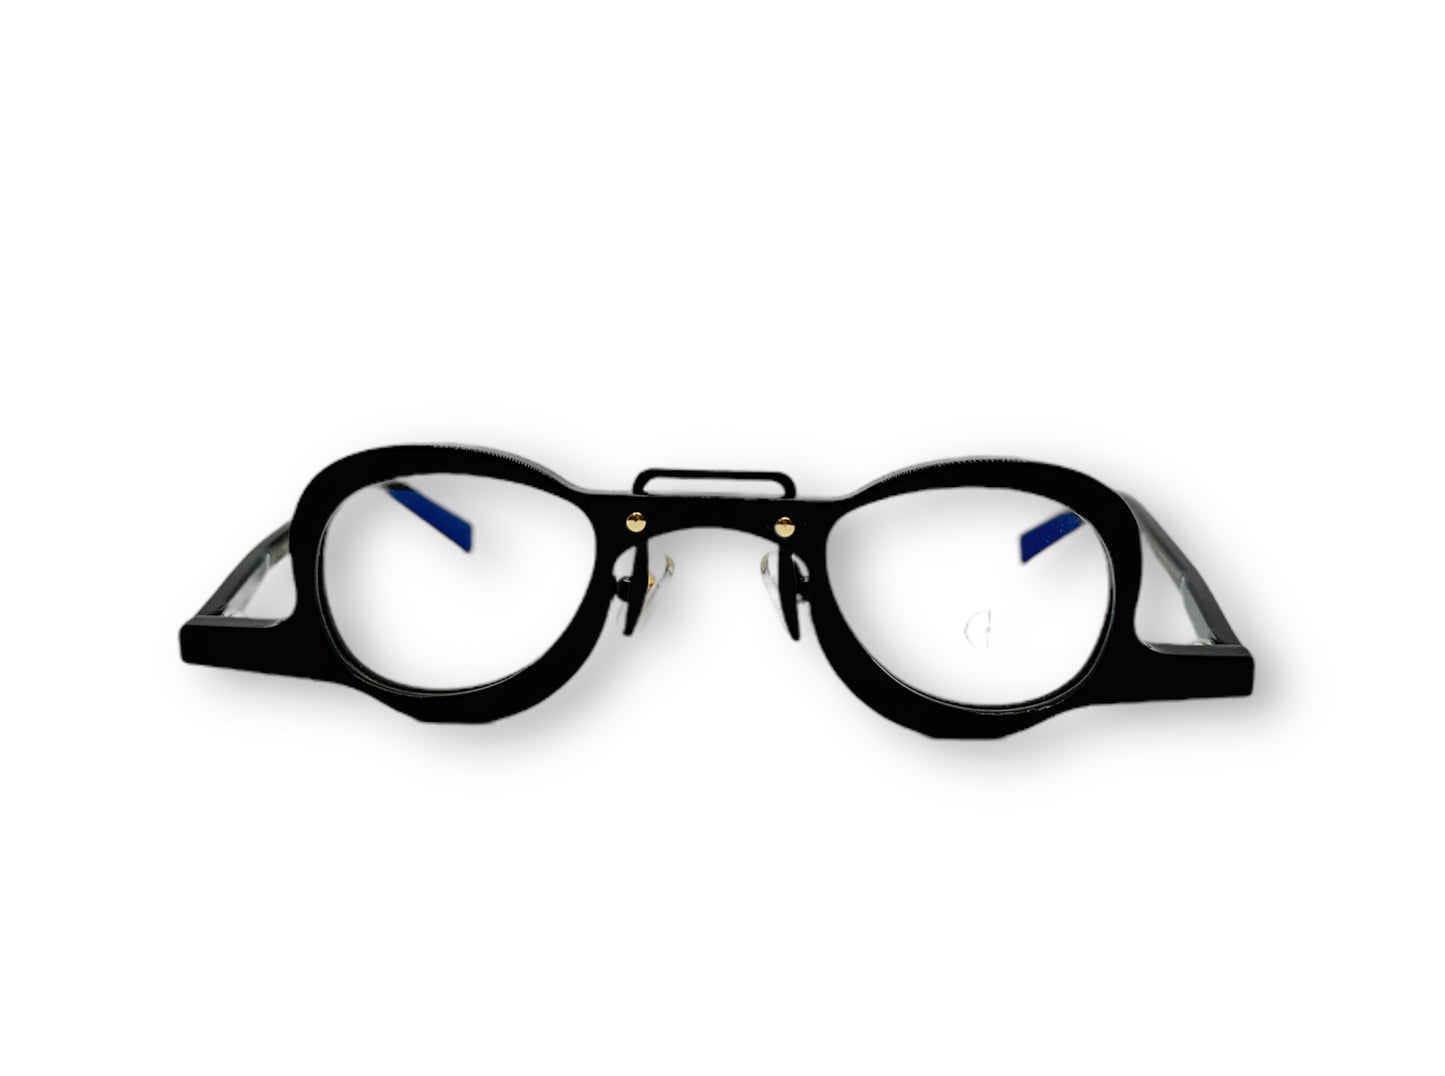 Corak Glasses G-17